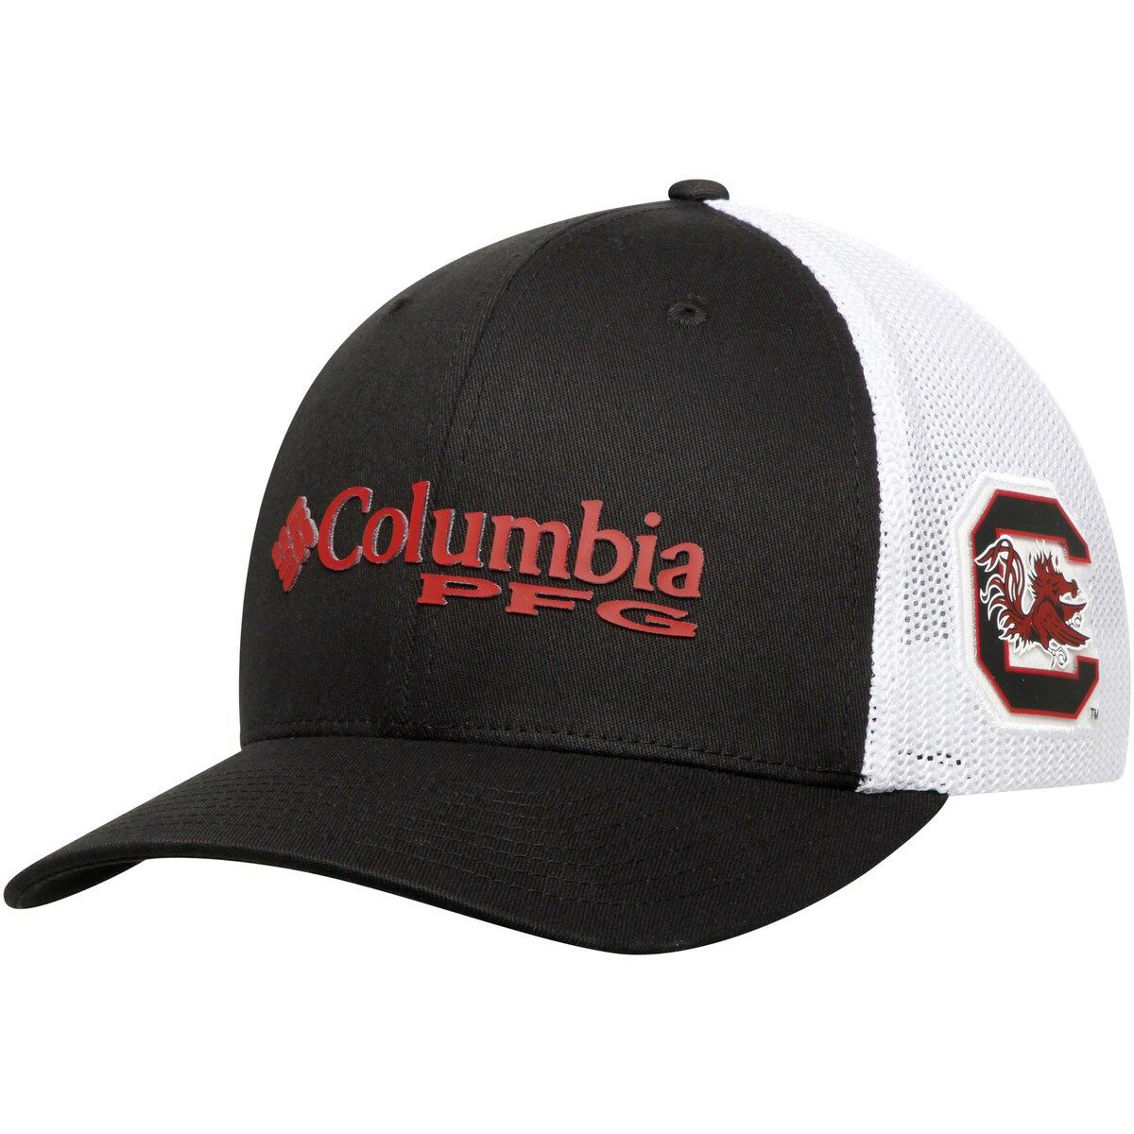 Men's Columbia Black South Carolina Gamecocks Collegiate PFG Flex Hat